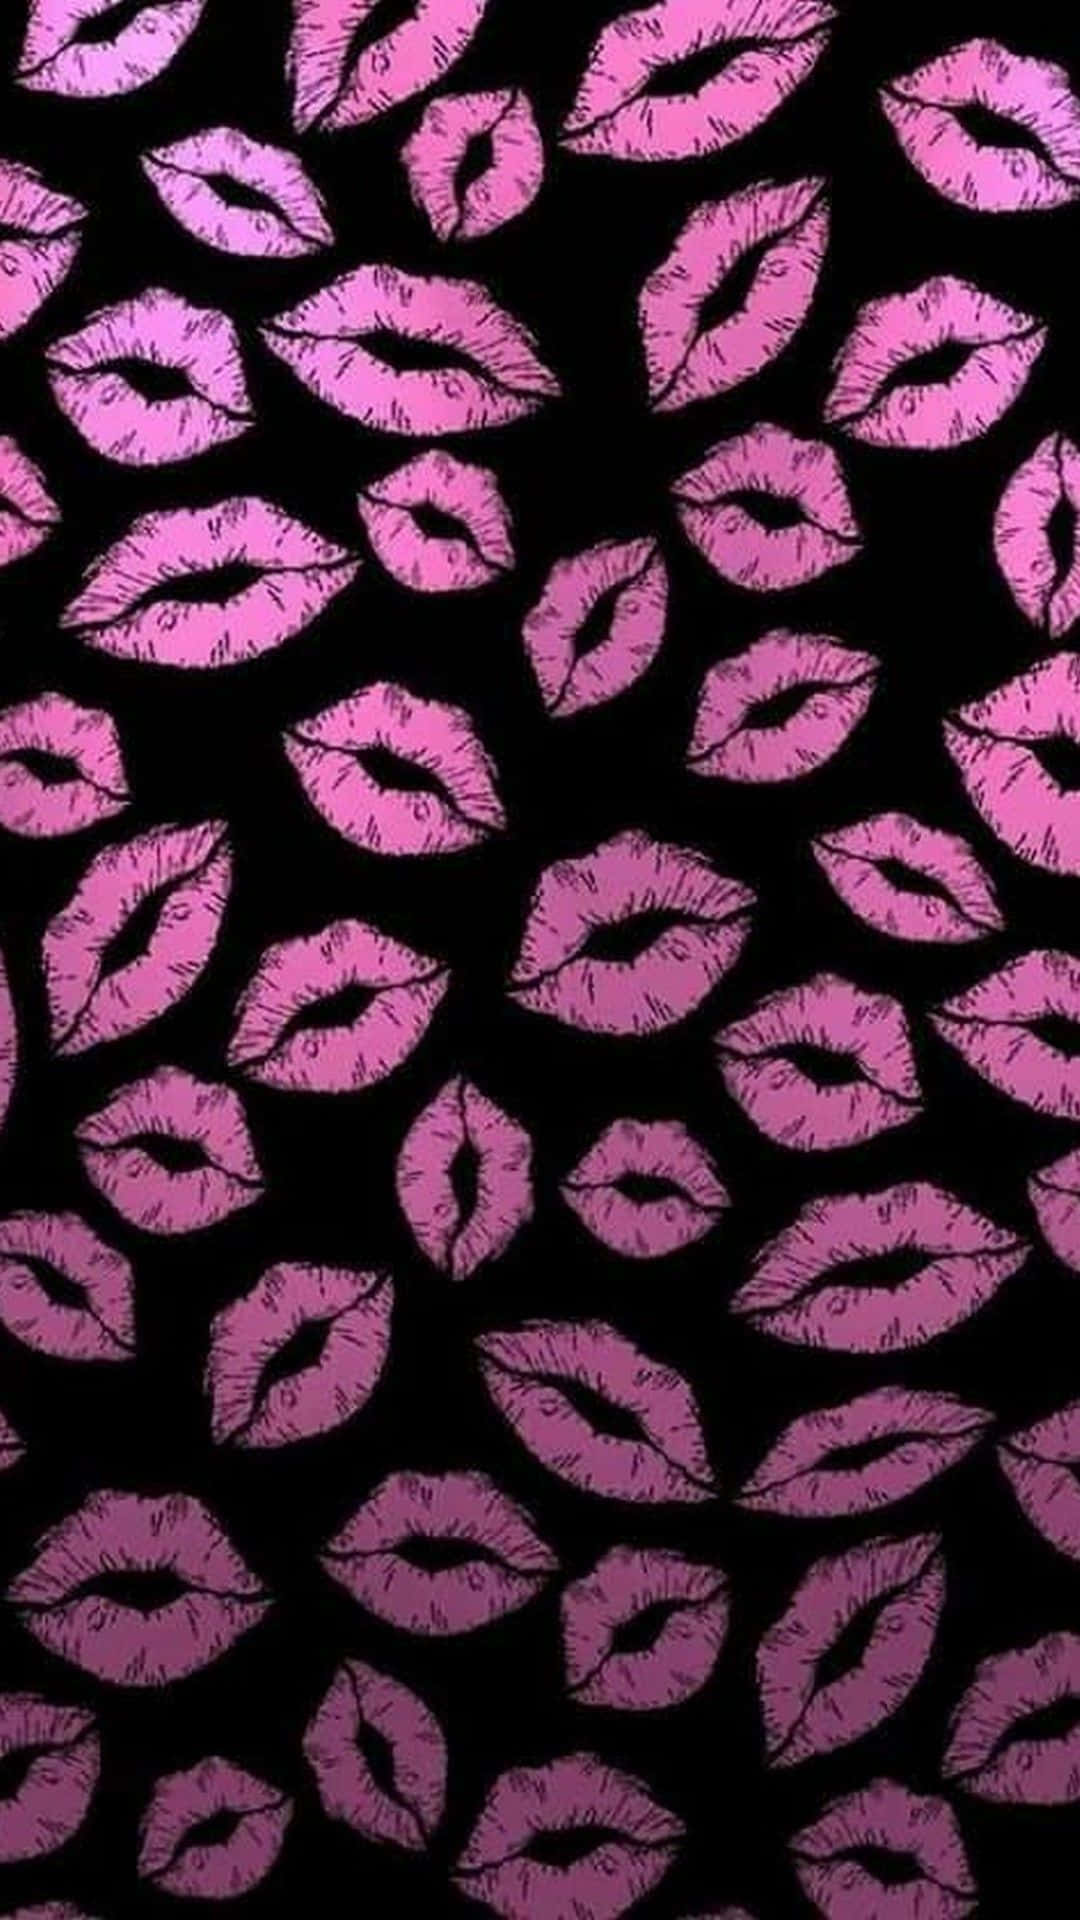 Lipstick Kiss Mark Pink And Black Background